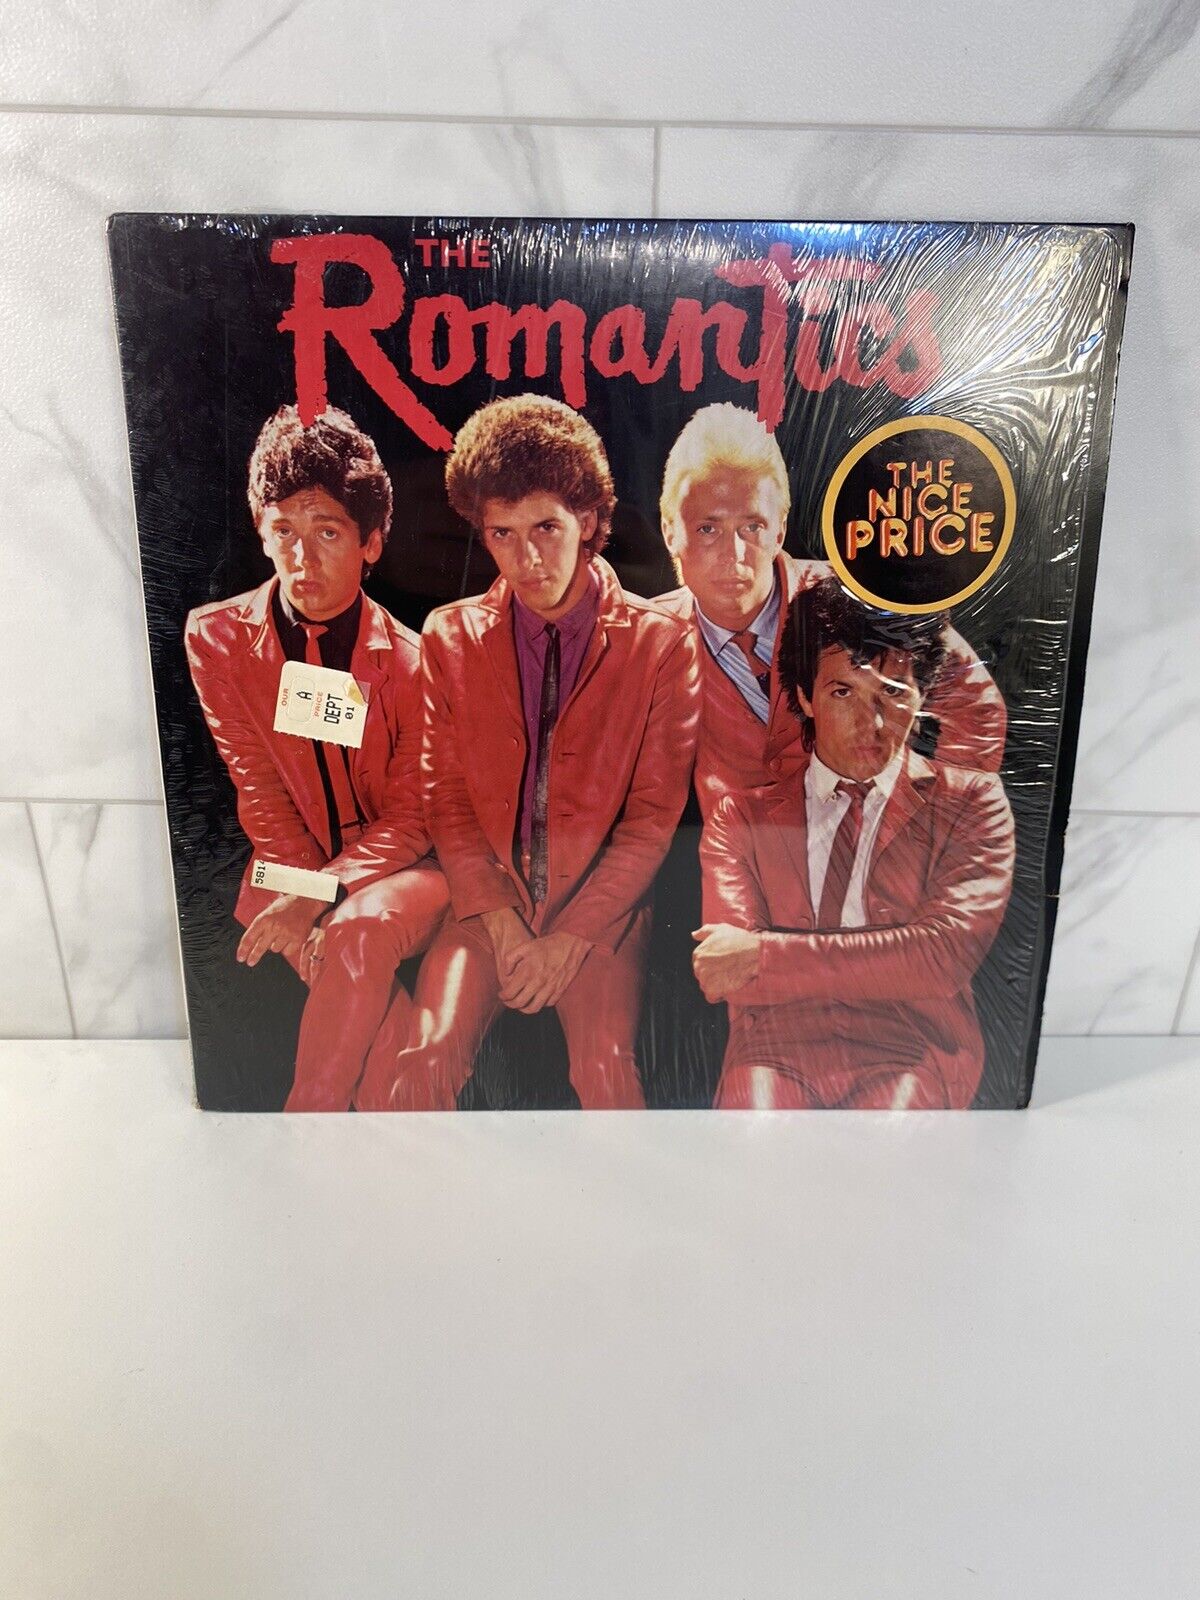 The Romantics Self Titled Vinyl 1980 VG+ See Photos Tested Plays Through